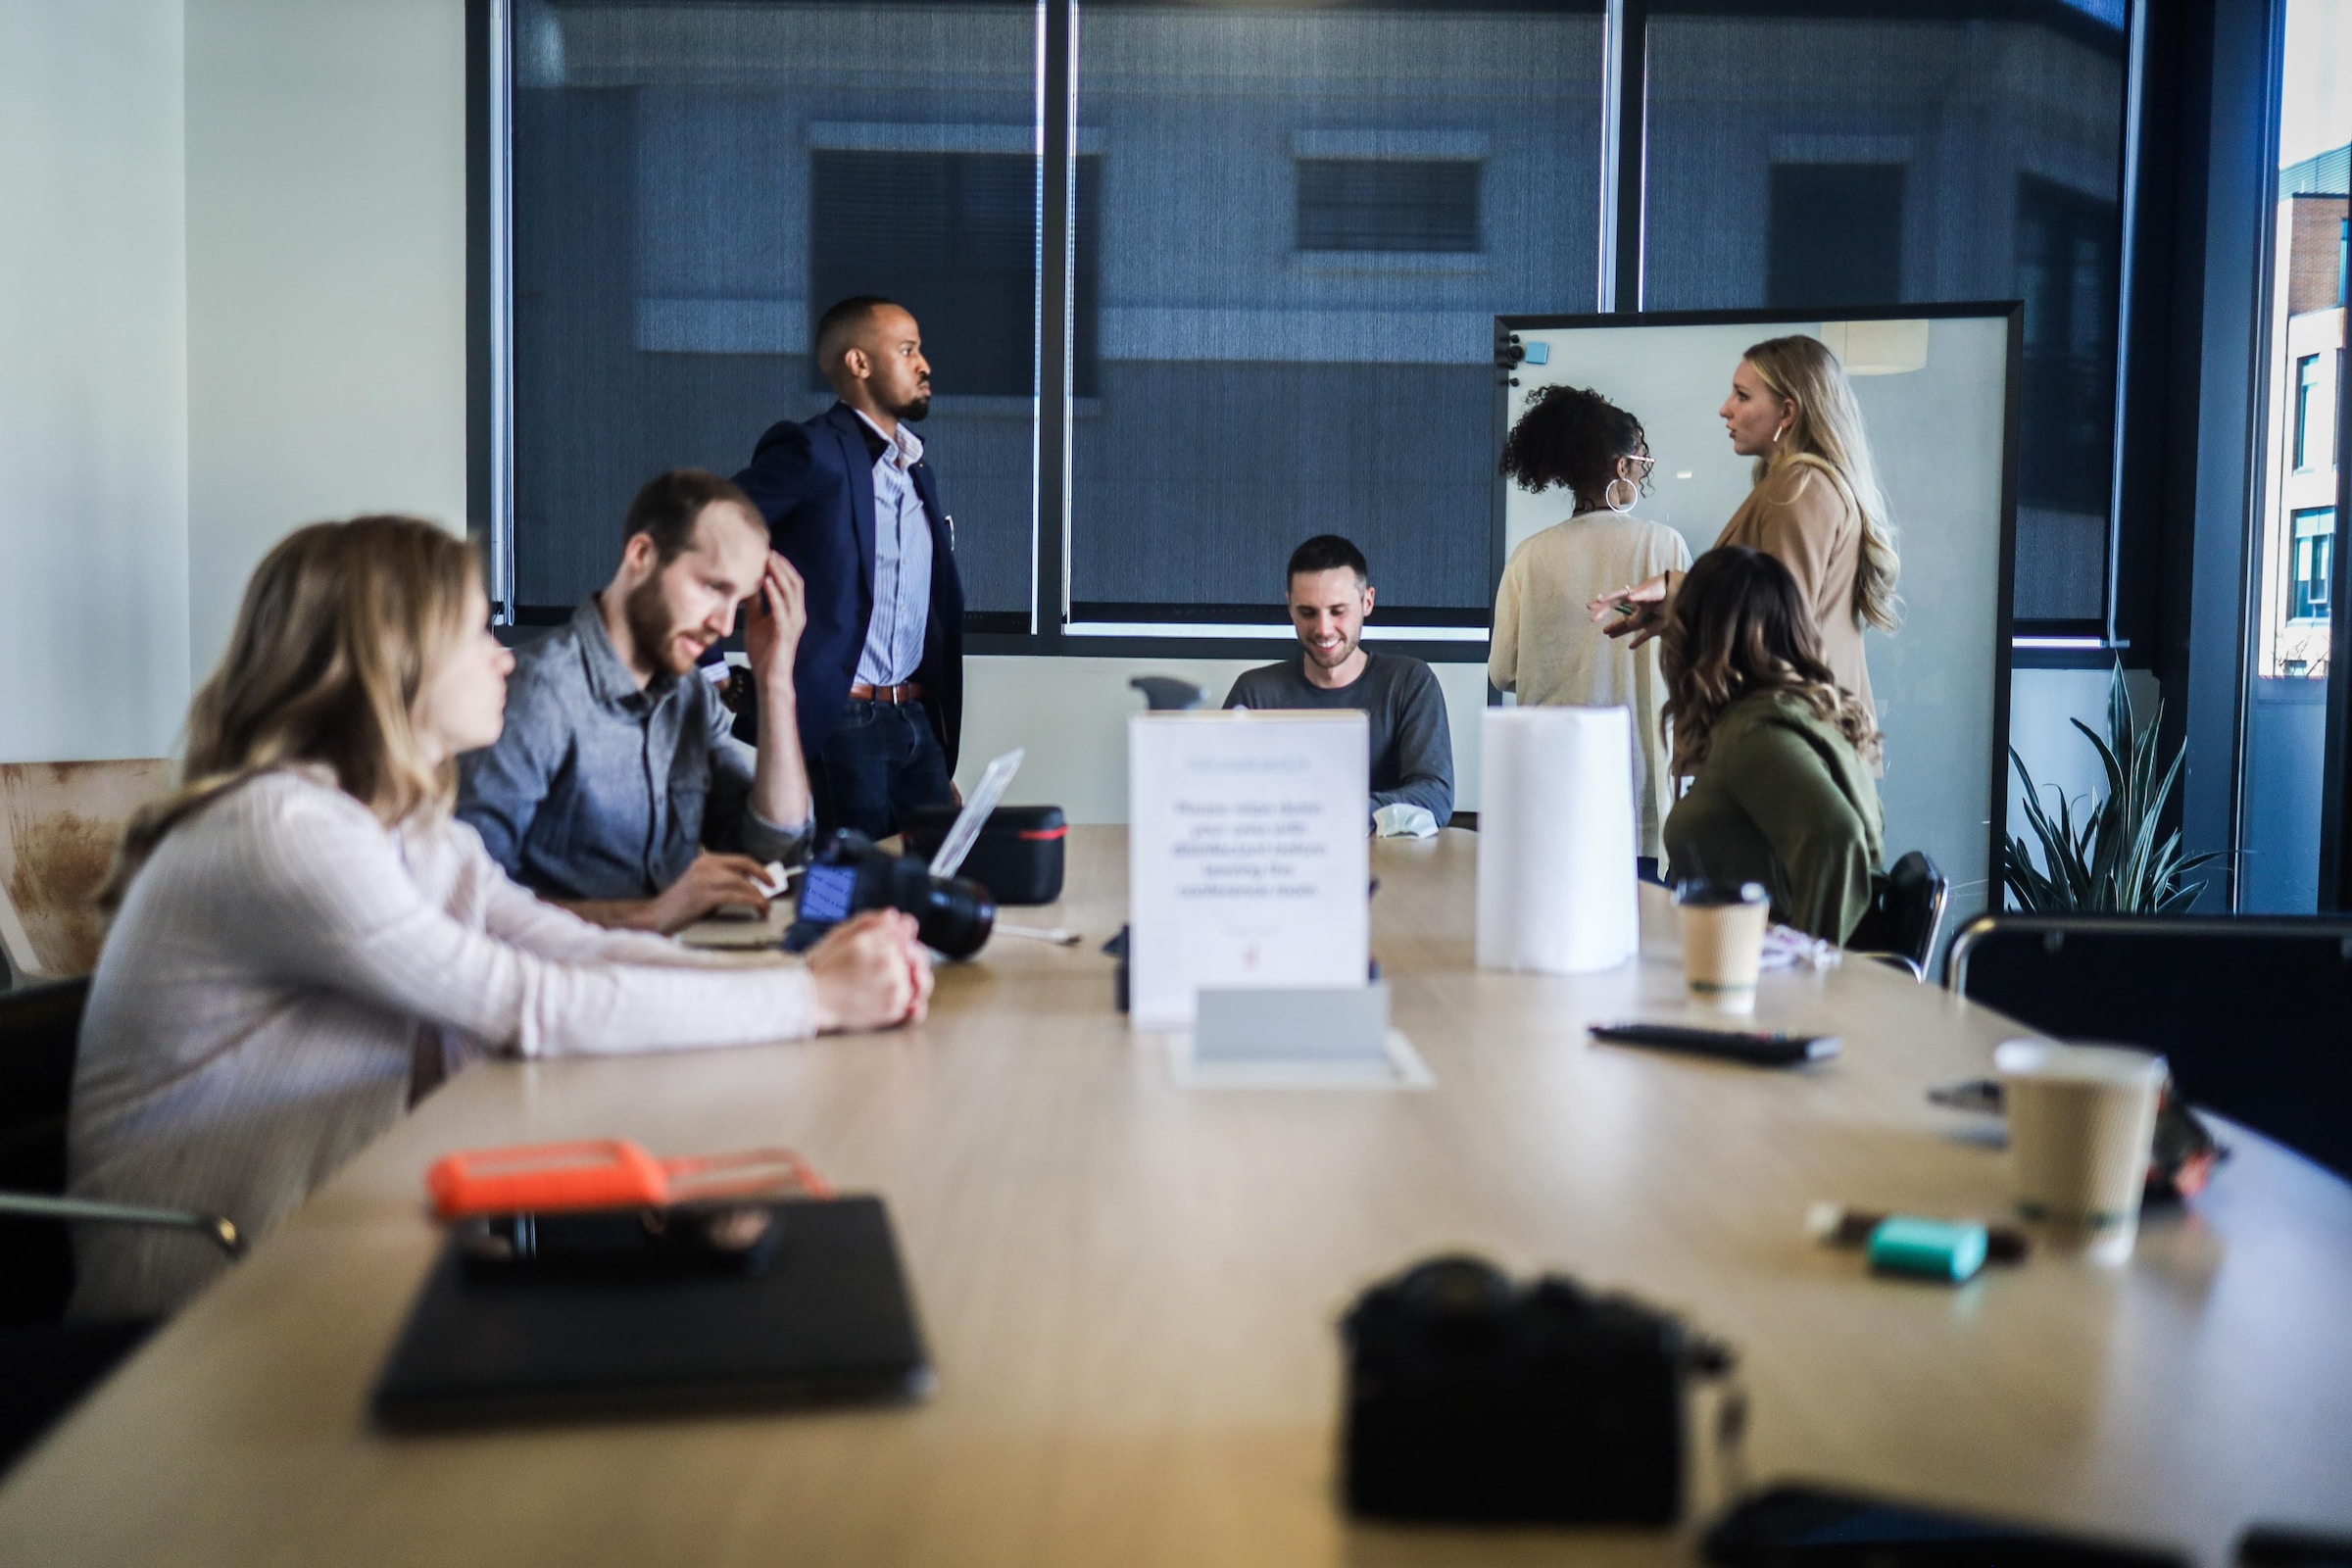 10 Meeting Room Management Best Practices